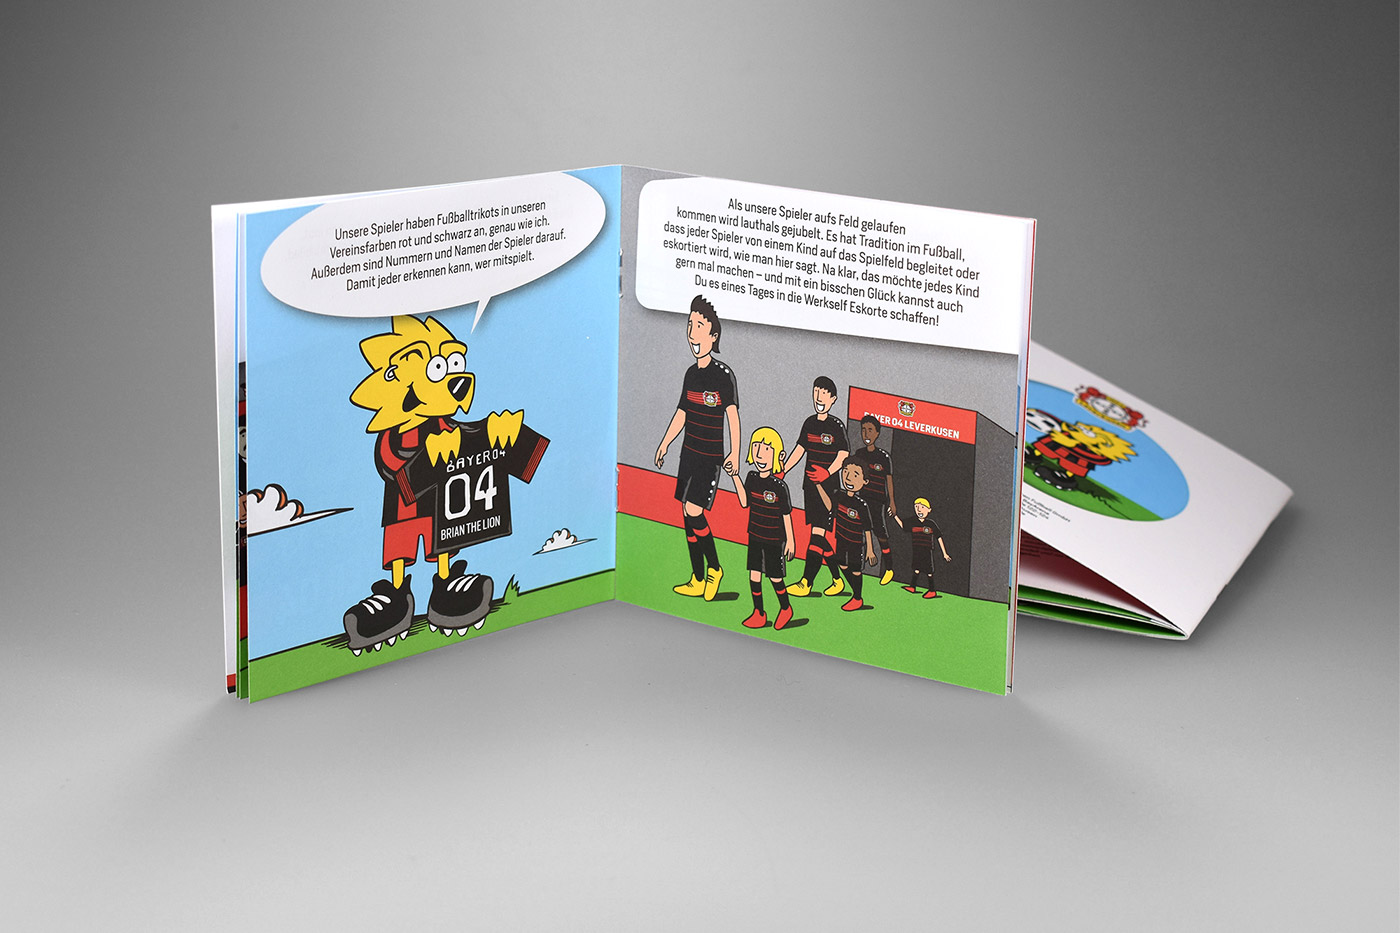 Bayer 04 Leverkusen Mini-Buch